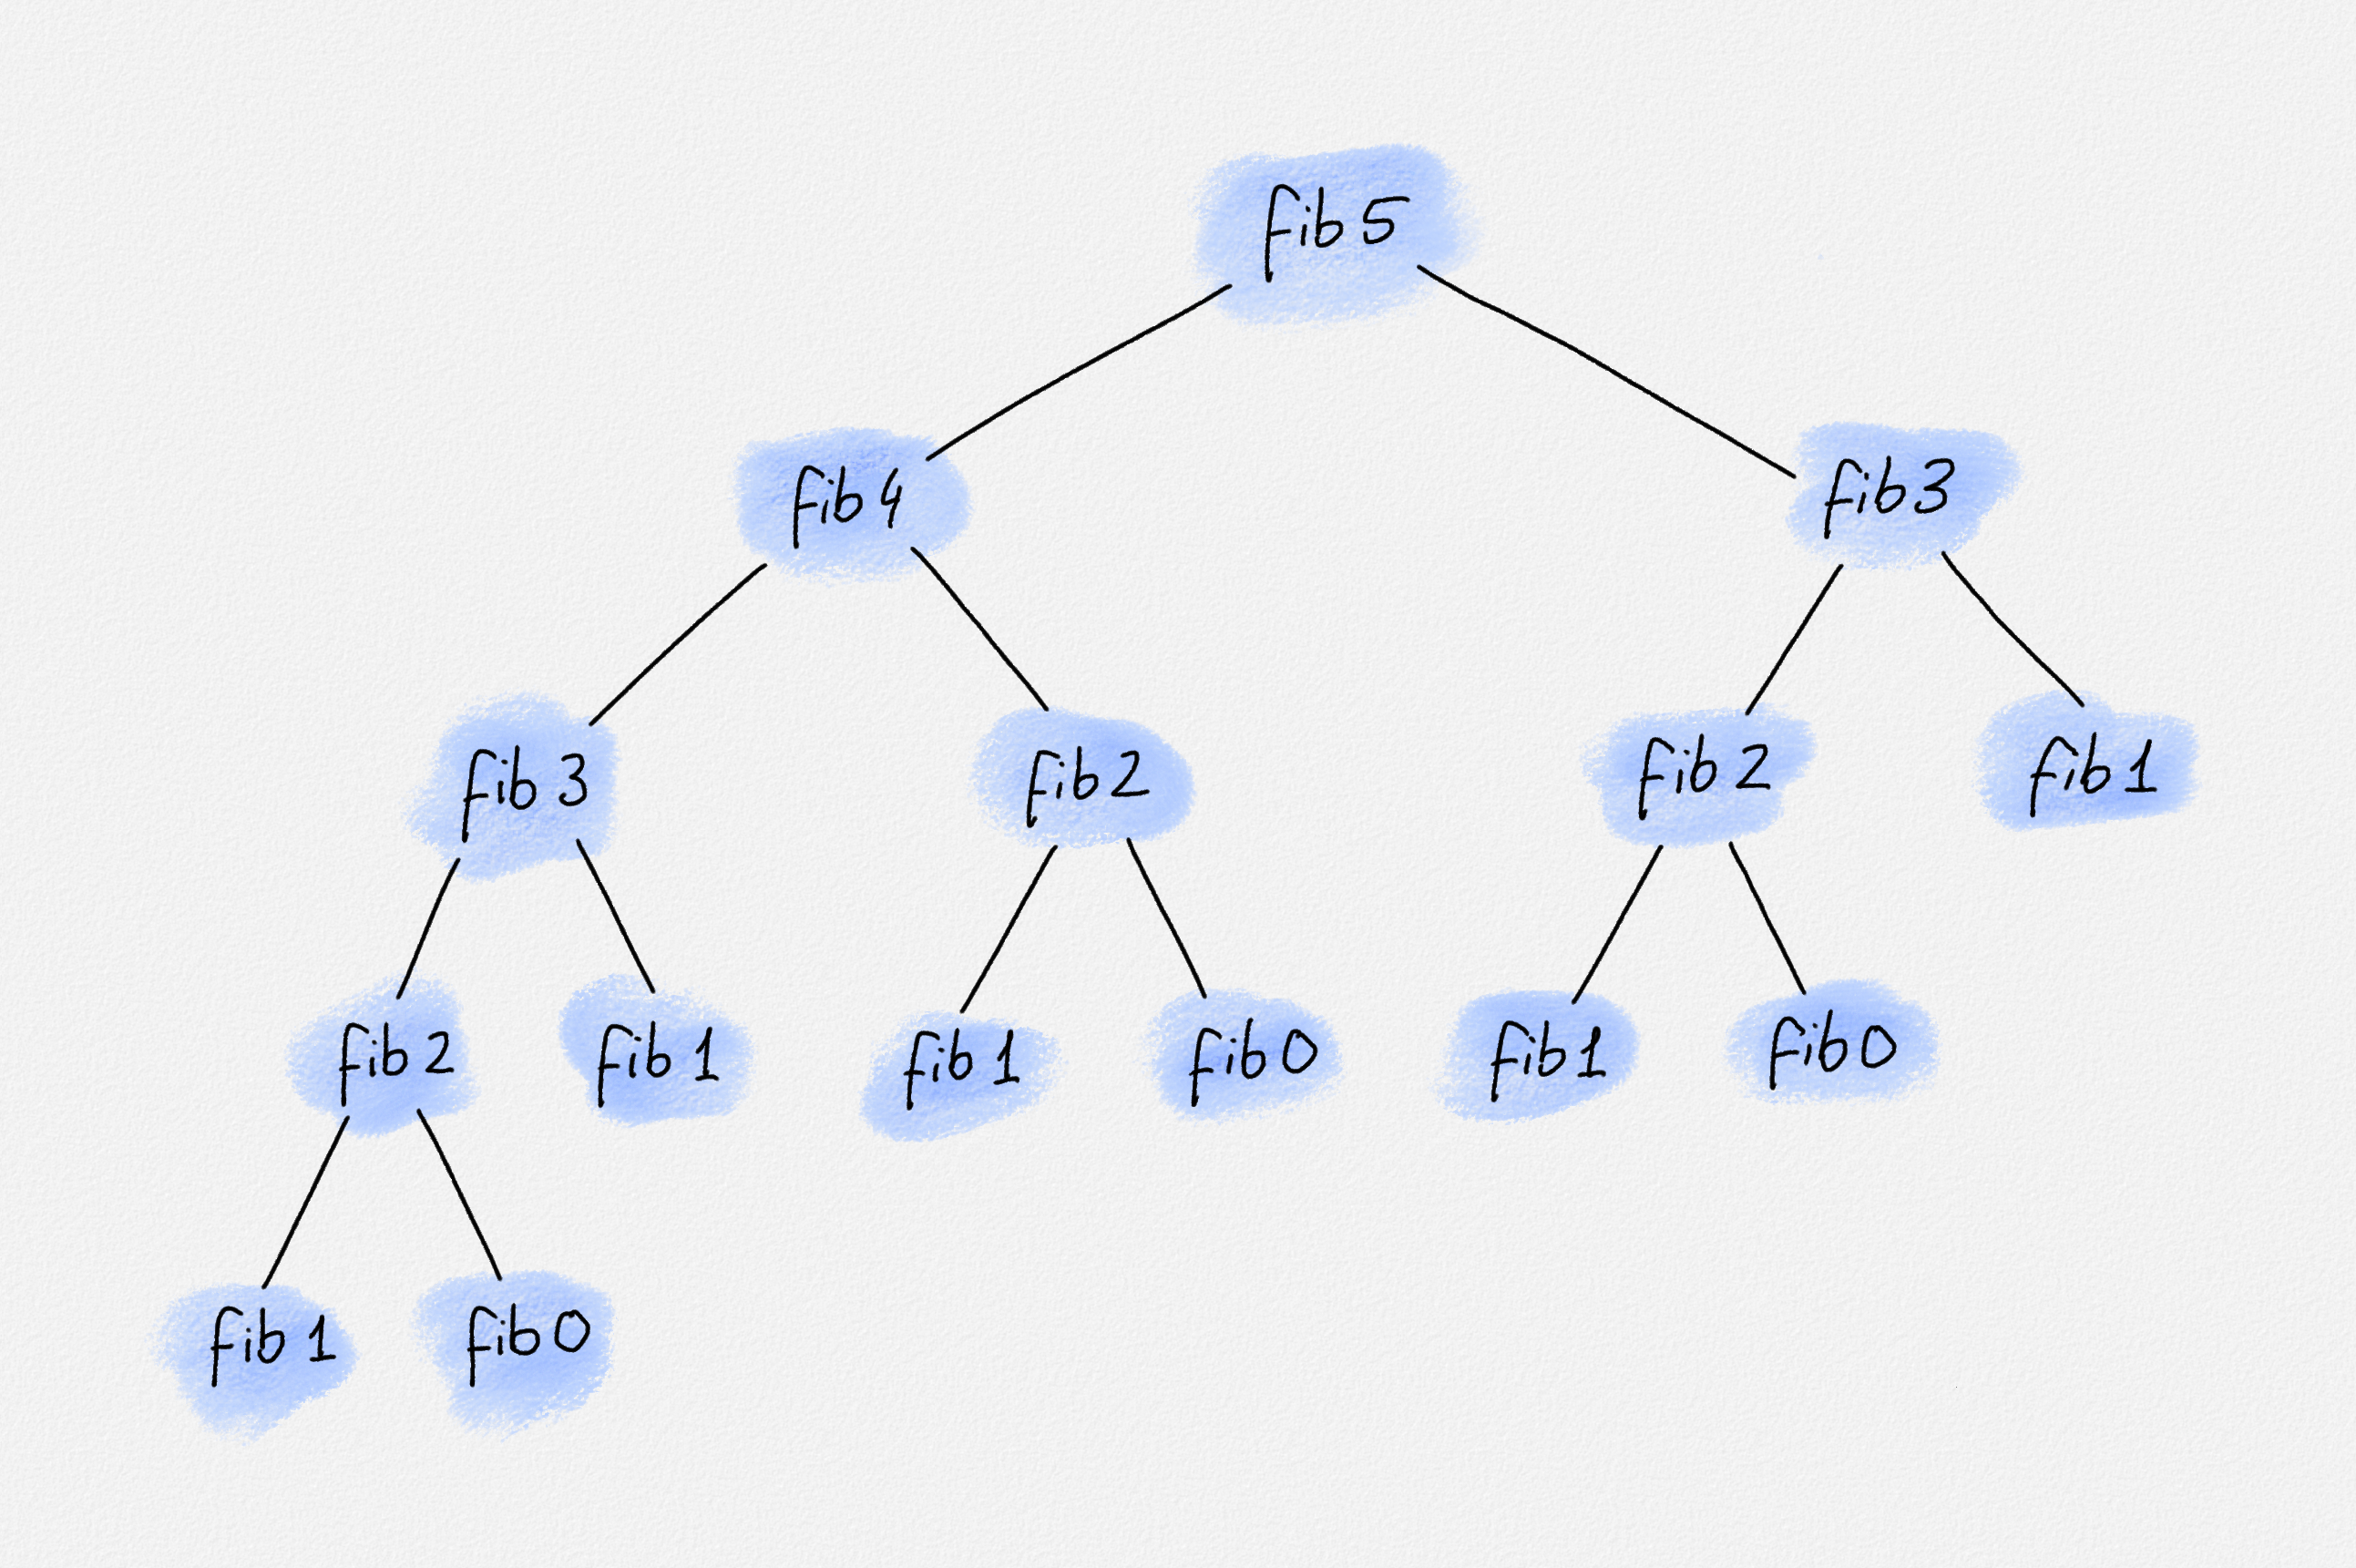 Recursion tree for fib 5